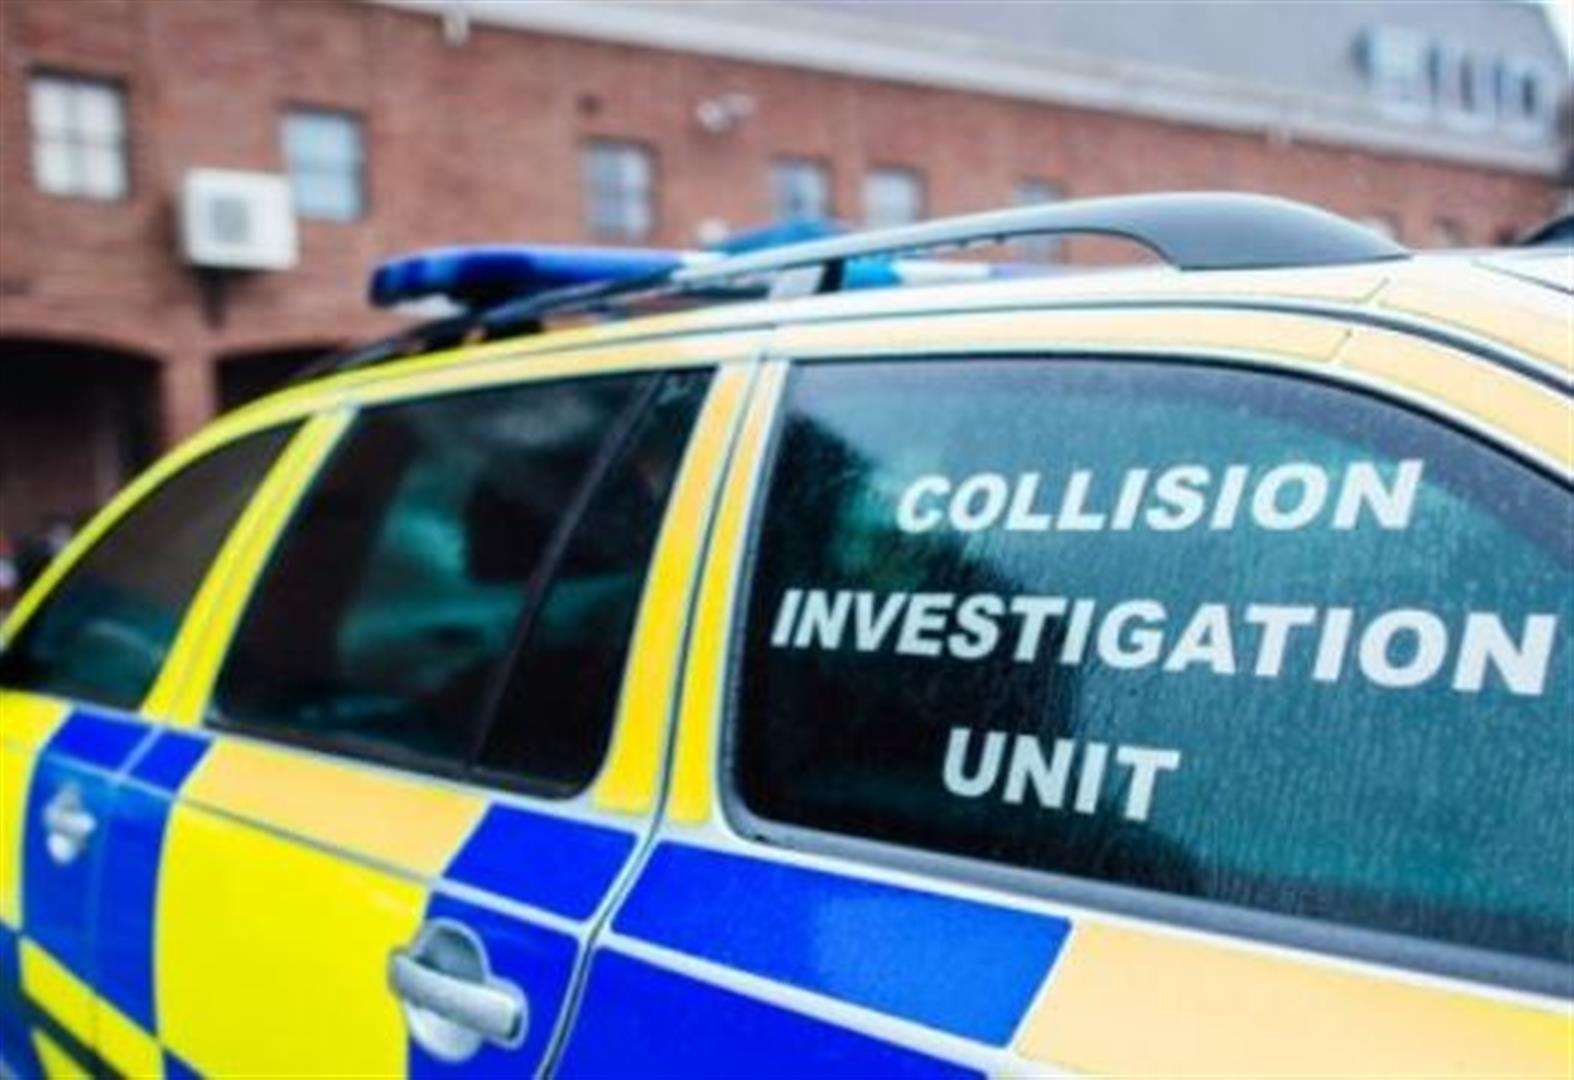 Kent Police collision investigation unit - Stock Image (1575591)